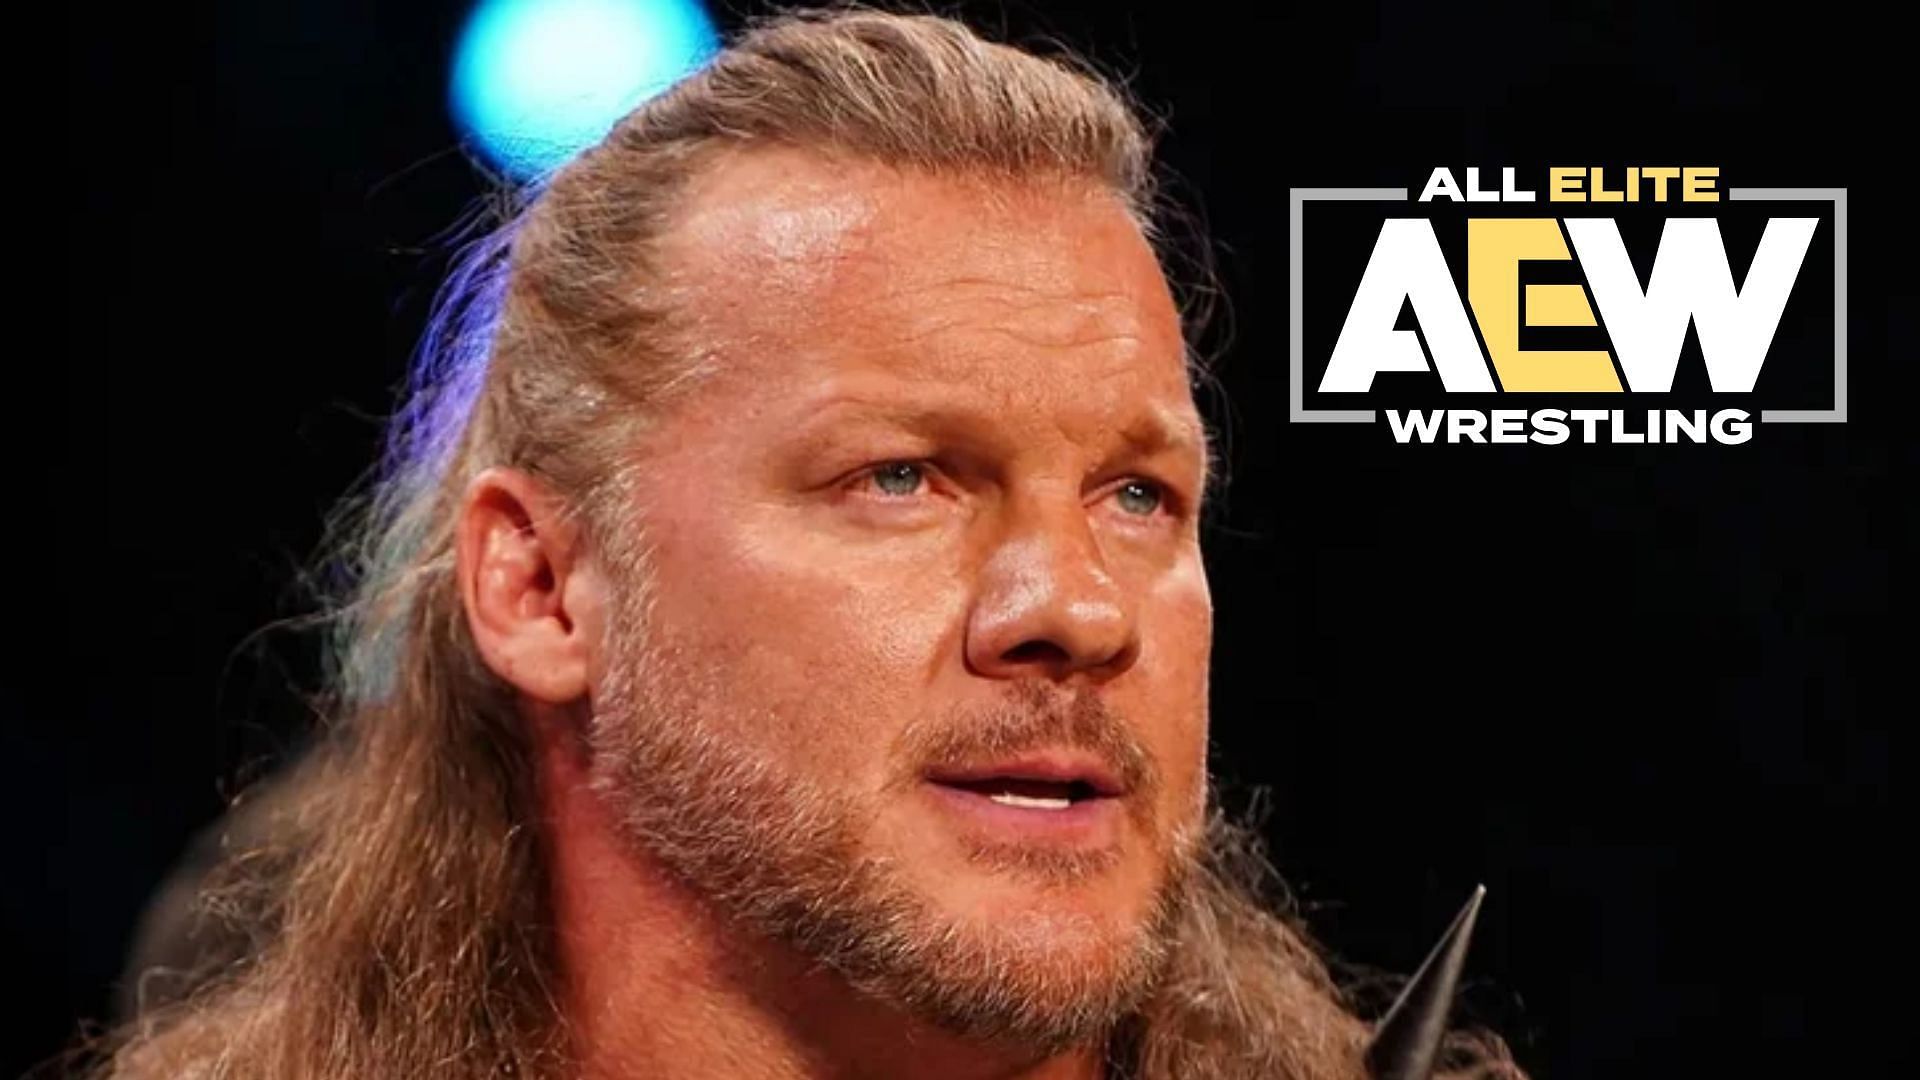 Chris Jericho put over a debuting AEW star